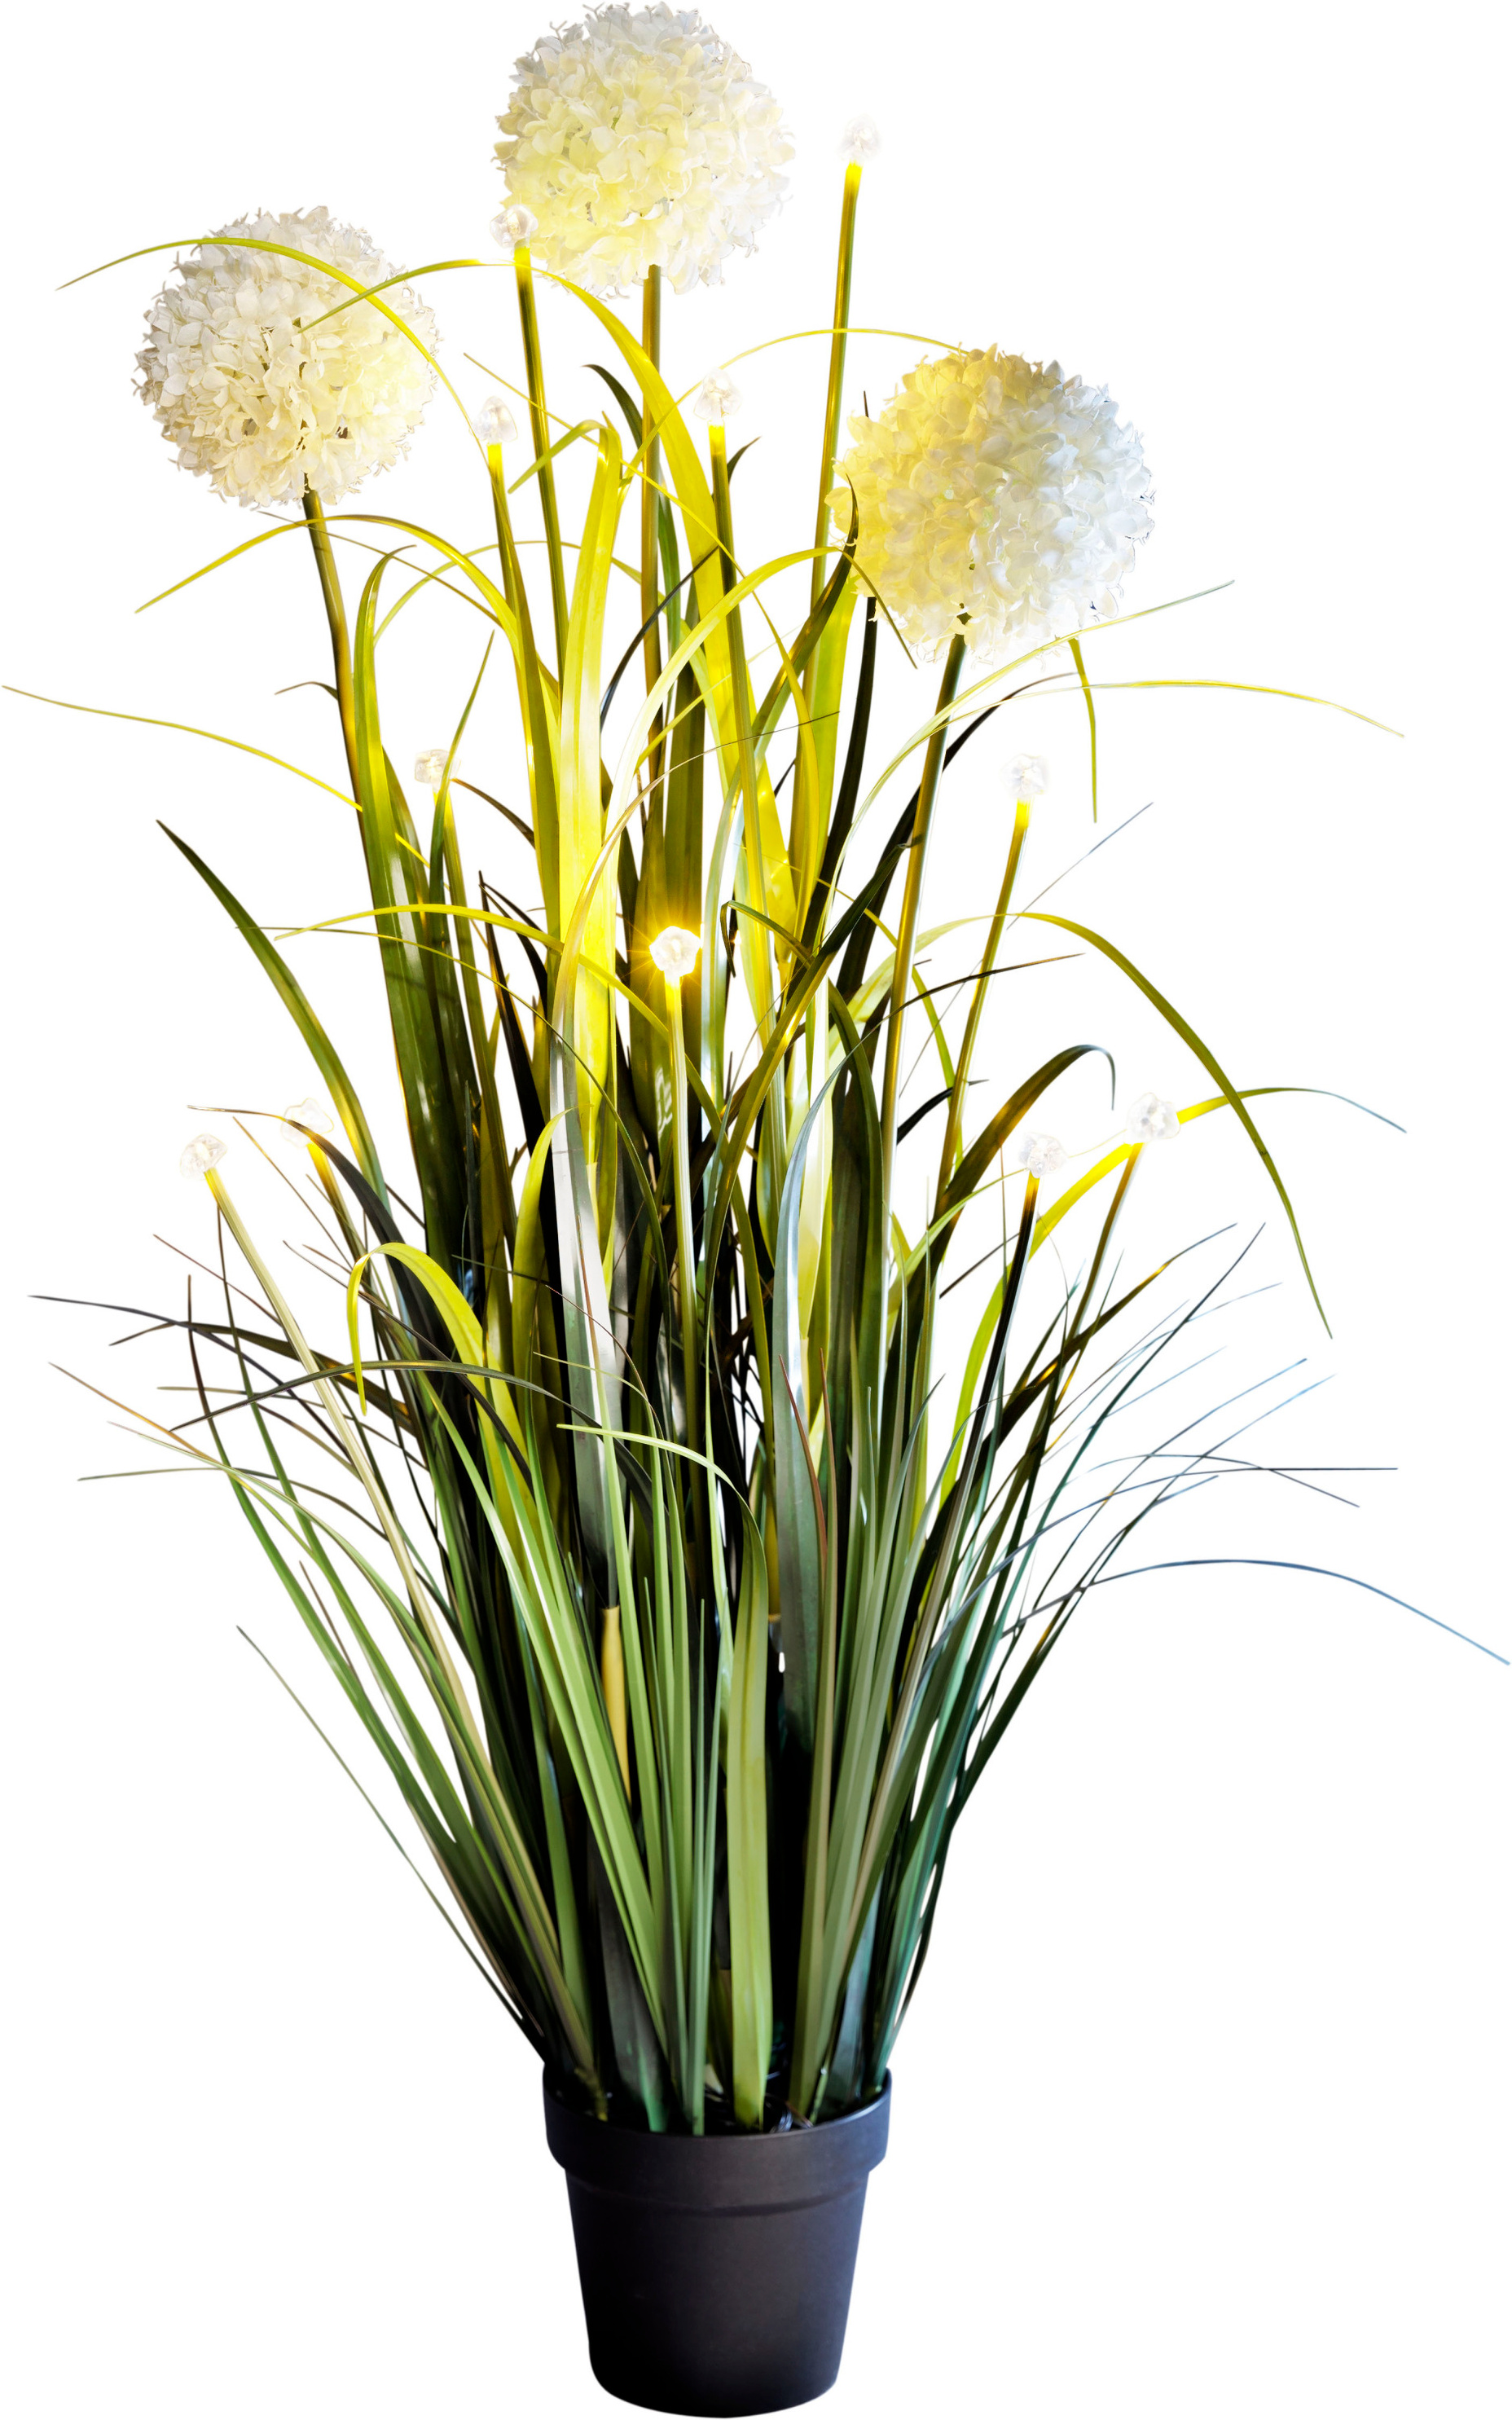 bei Allium jetzt LED-Blumendeko Weltbild.de bestellen